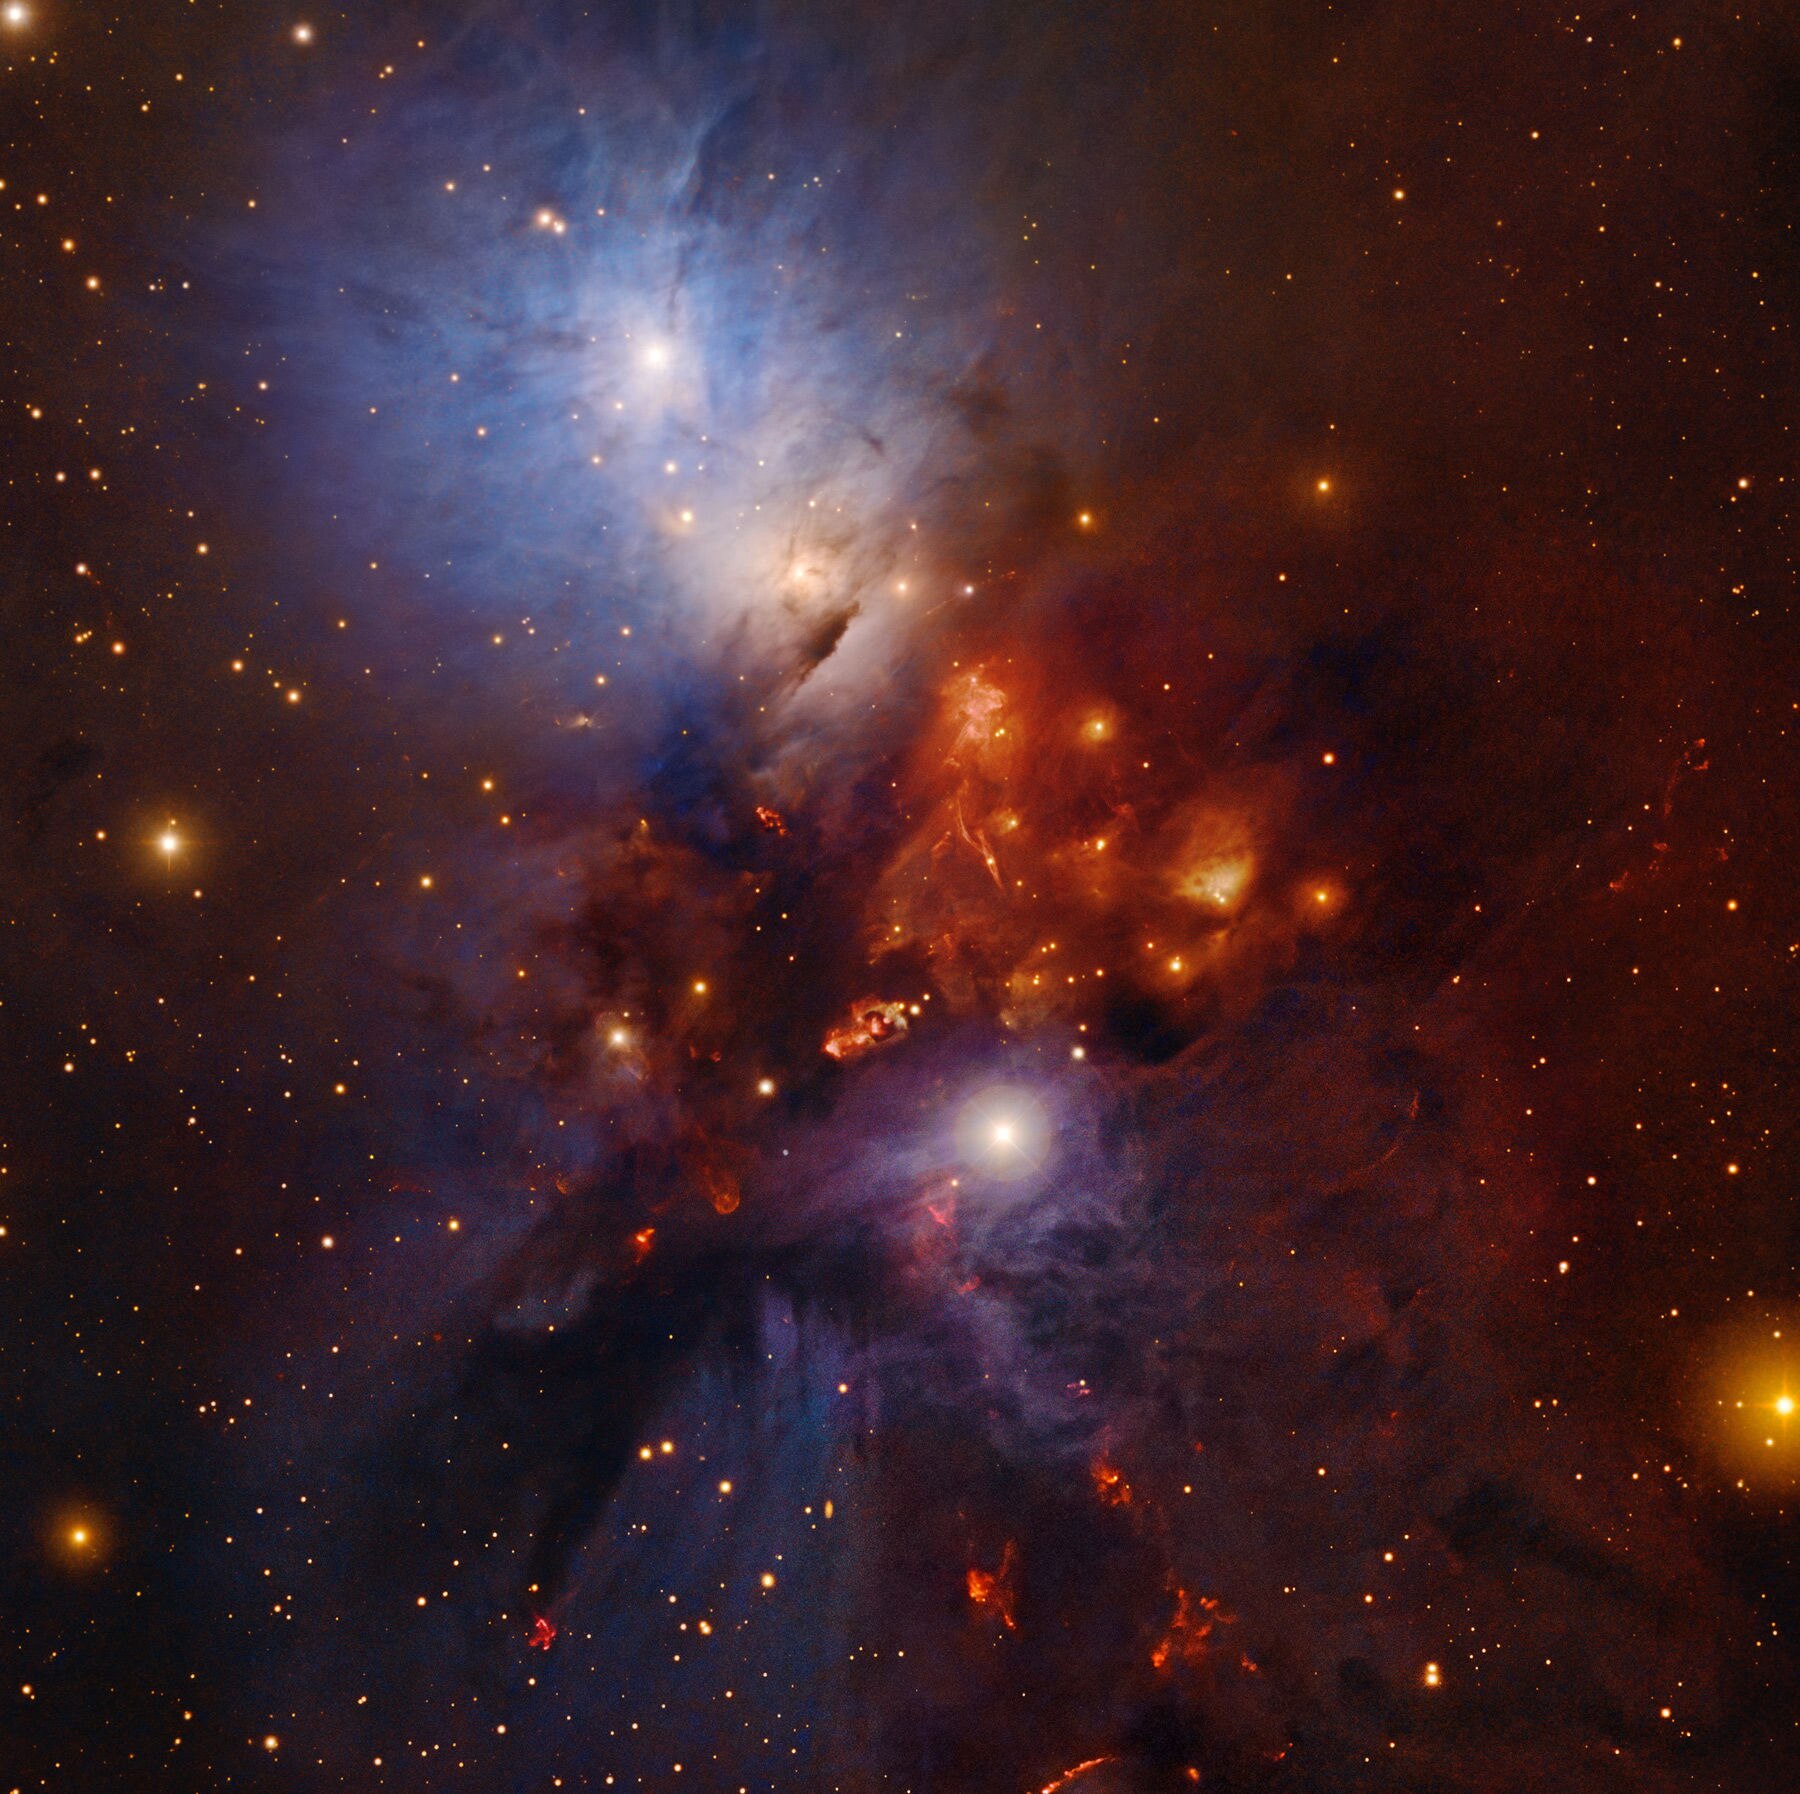 Turbulence, eruptive stars, gassy discharge, and sheer beauty: NGC 1333 has it all. Credit: NAOJ/DSS/NOAO/Robert Gendler & Roberto Colombari